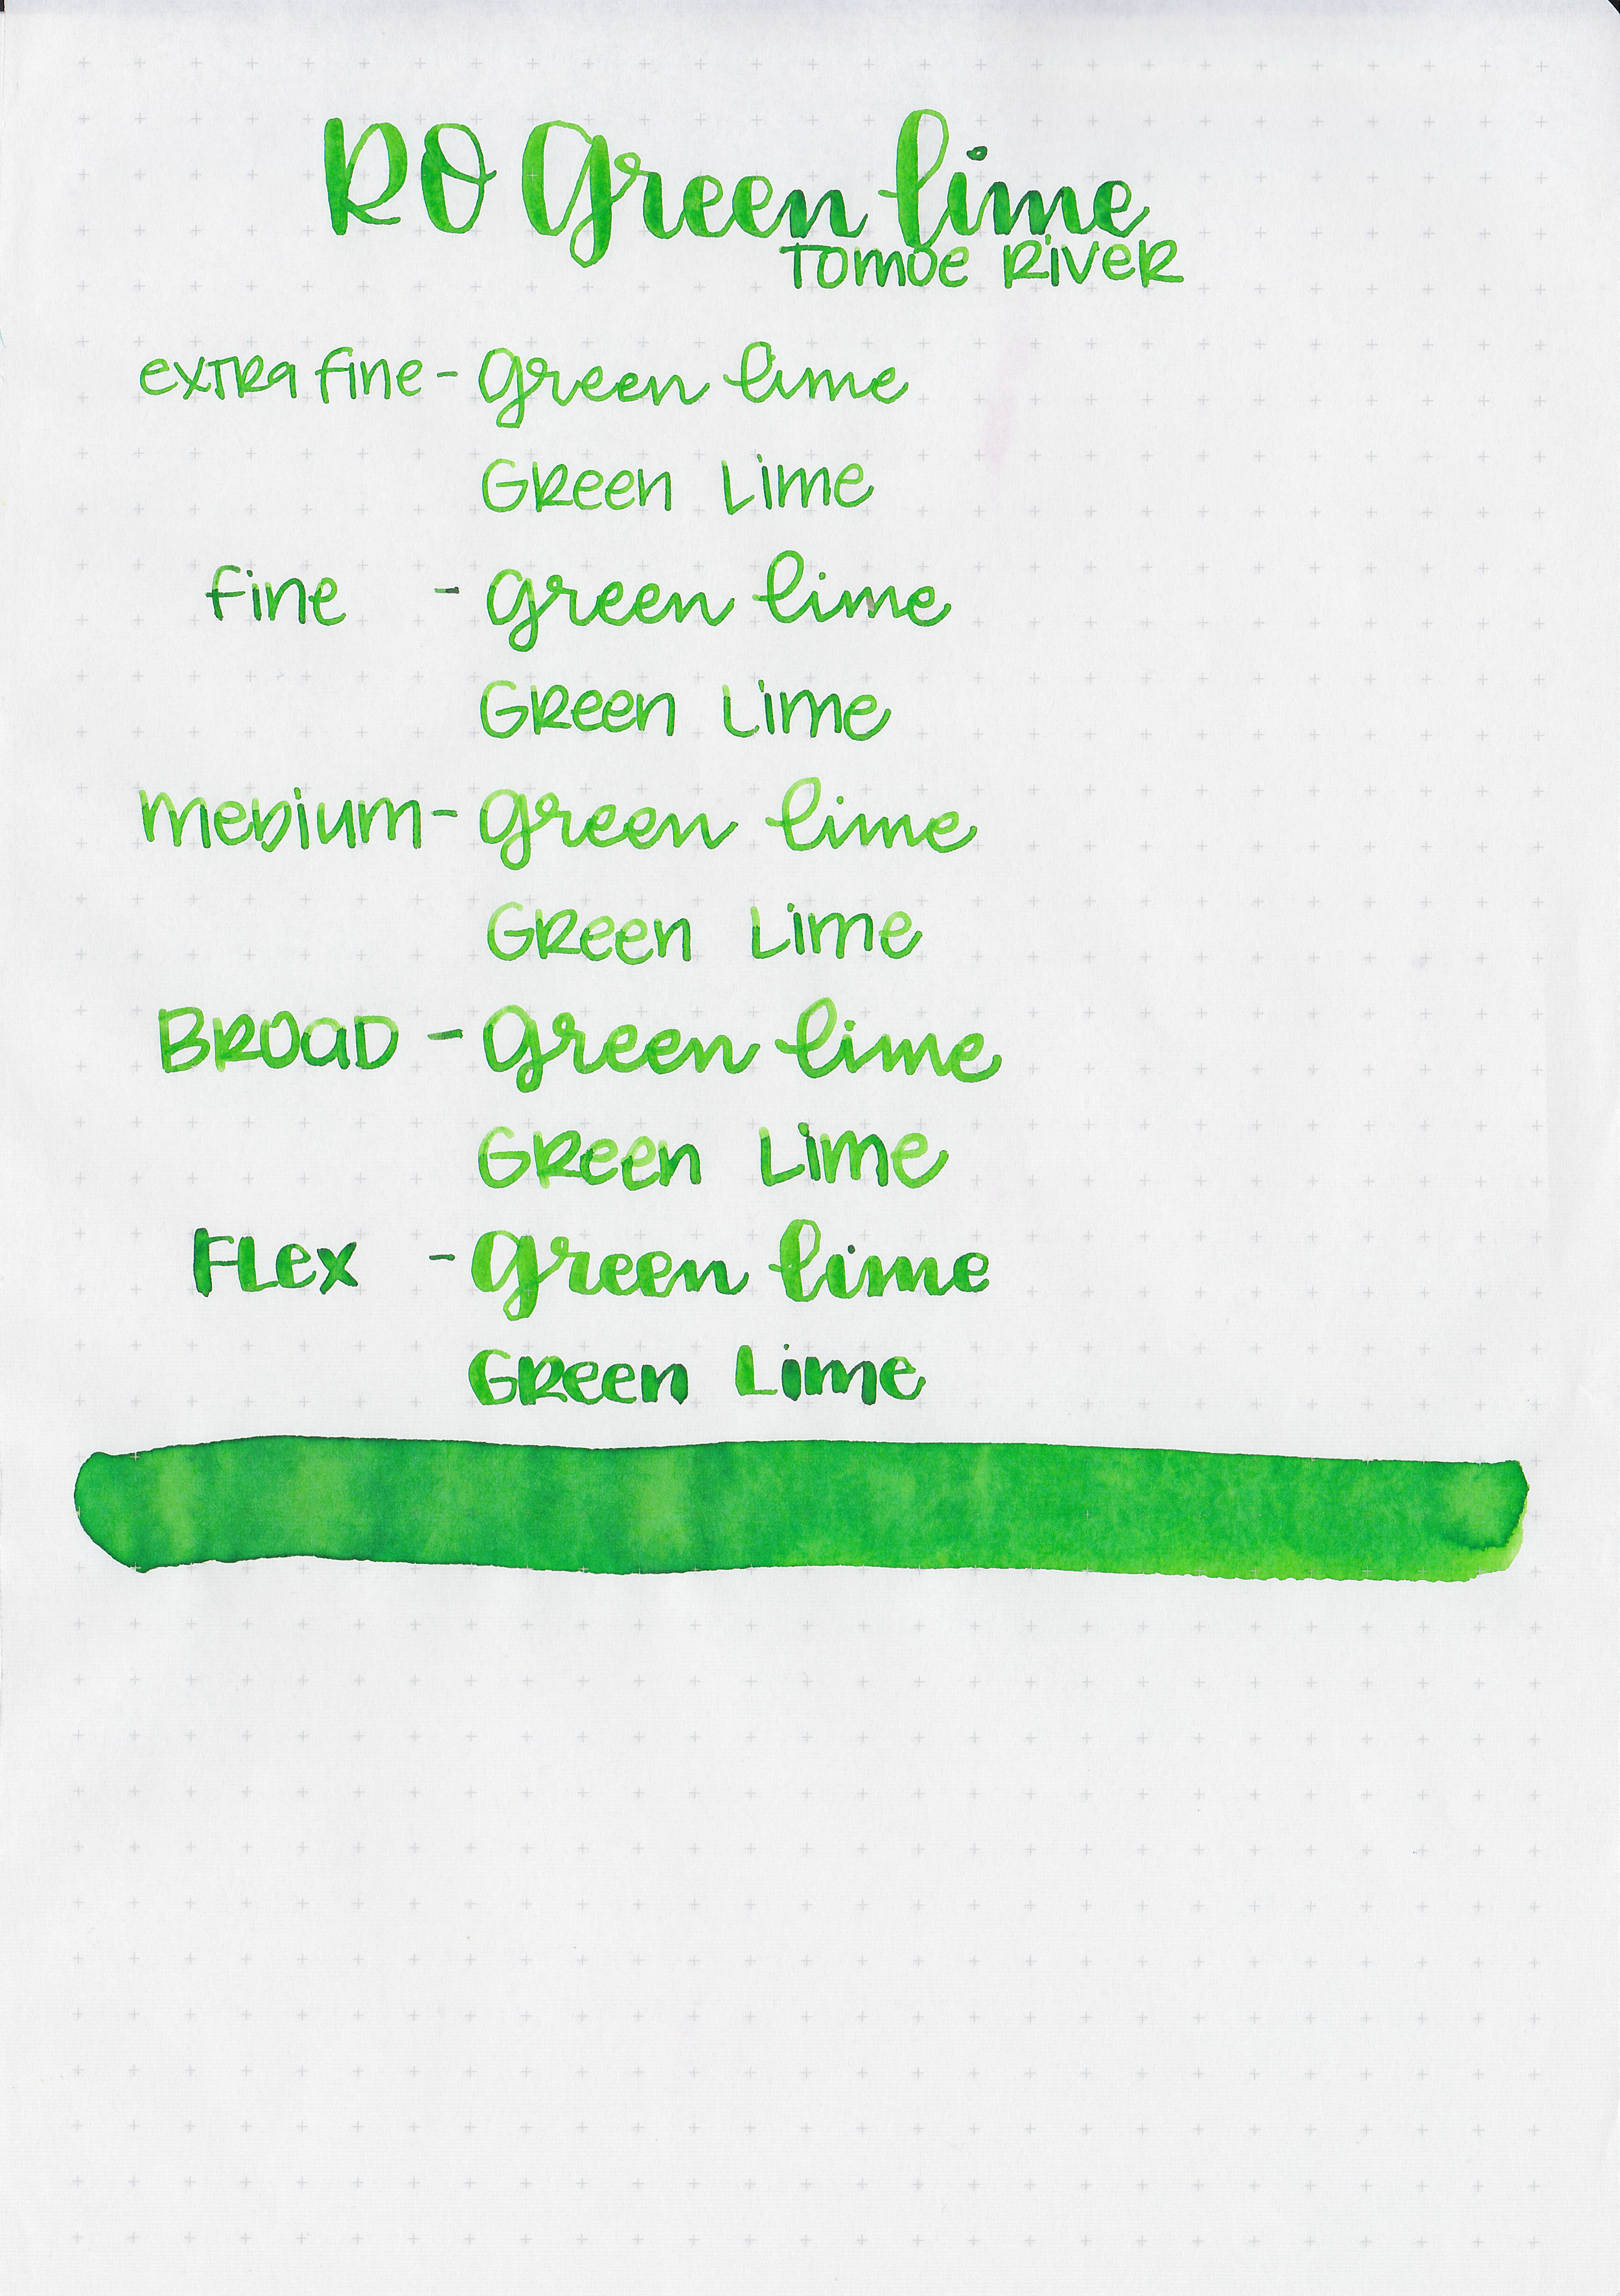 ro-green-lime-8.jpg